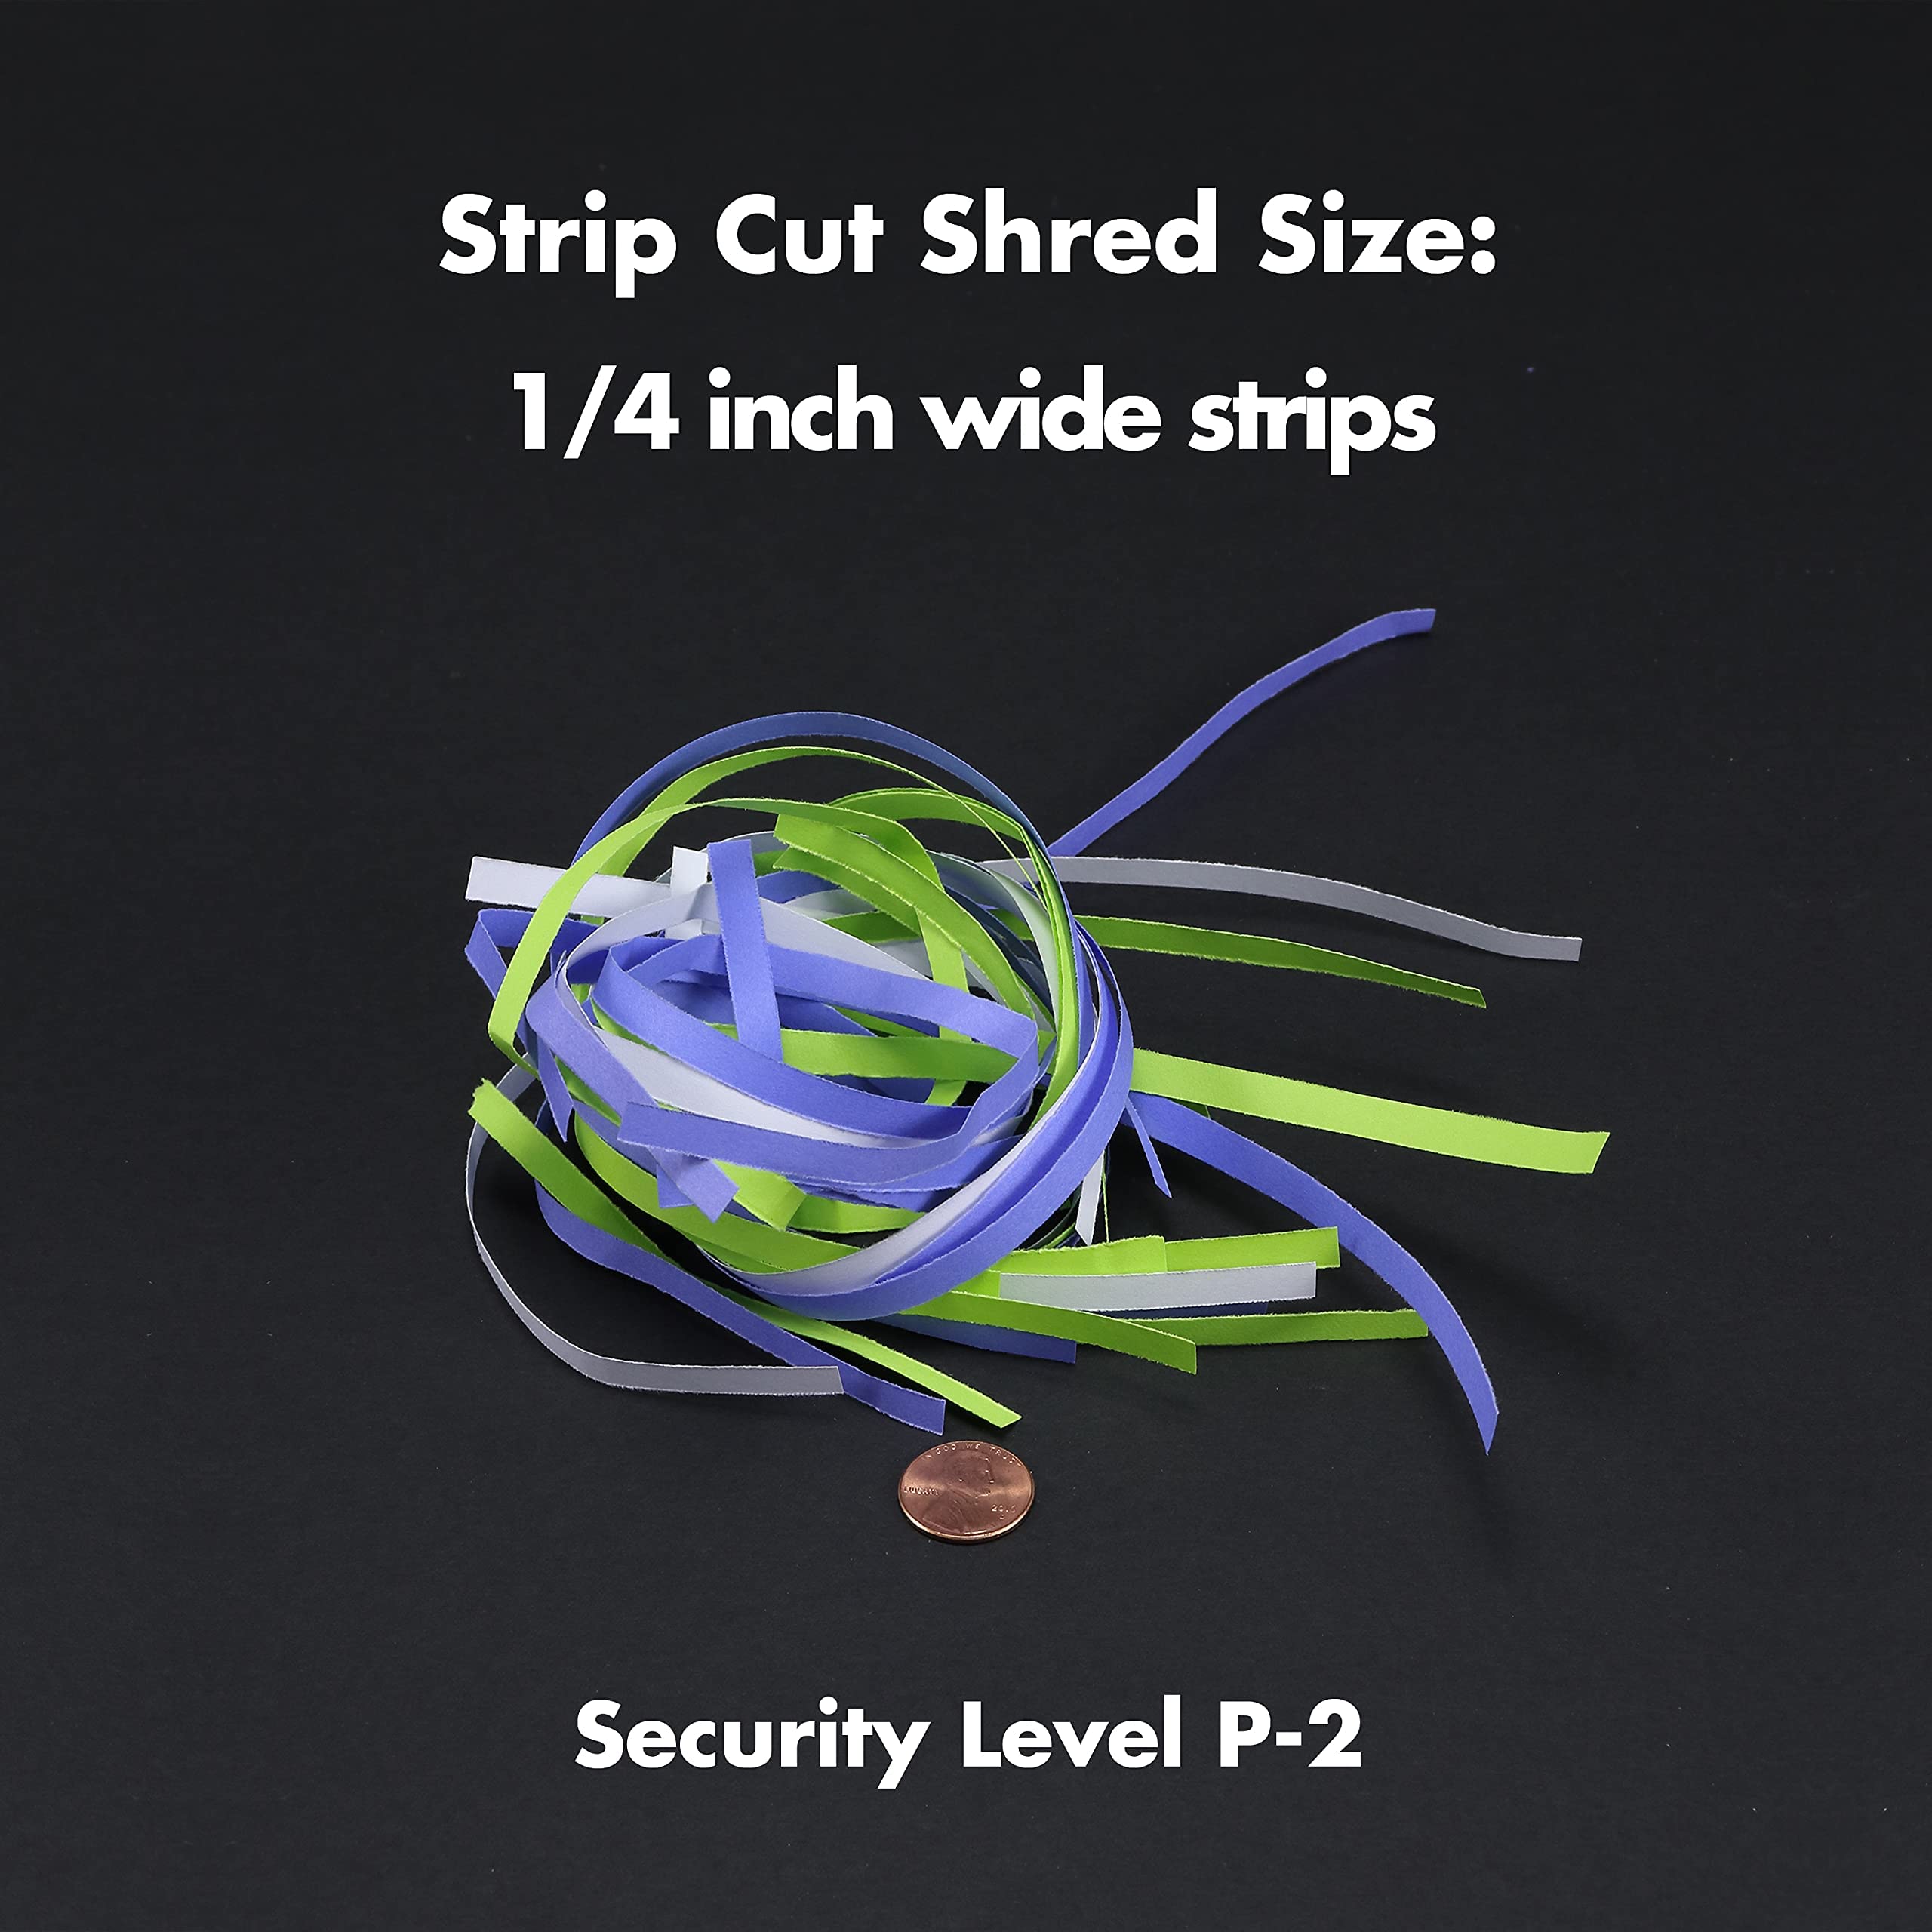 Aurora Professional Strip Cut Paper Shredder/CD/Credit Card Shredder Without Wastebasket, 8-Sheet Strip-Cut No Basket